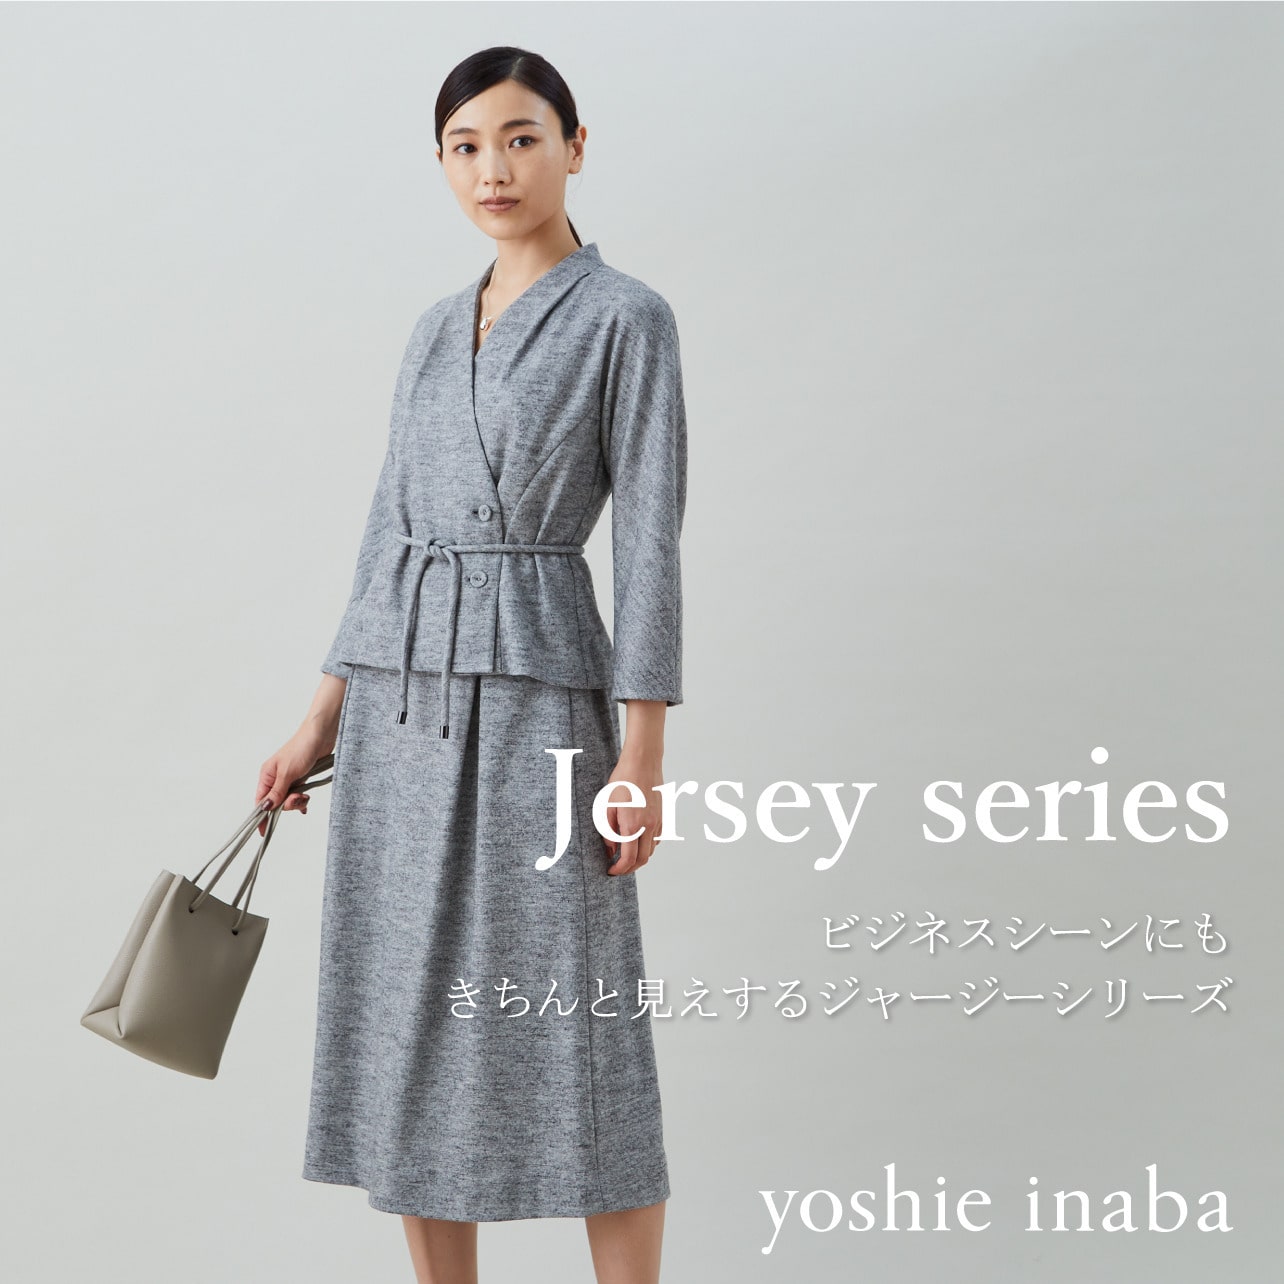 yoshie inabaのジャージーシリーズ